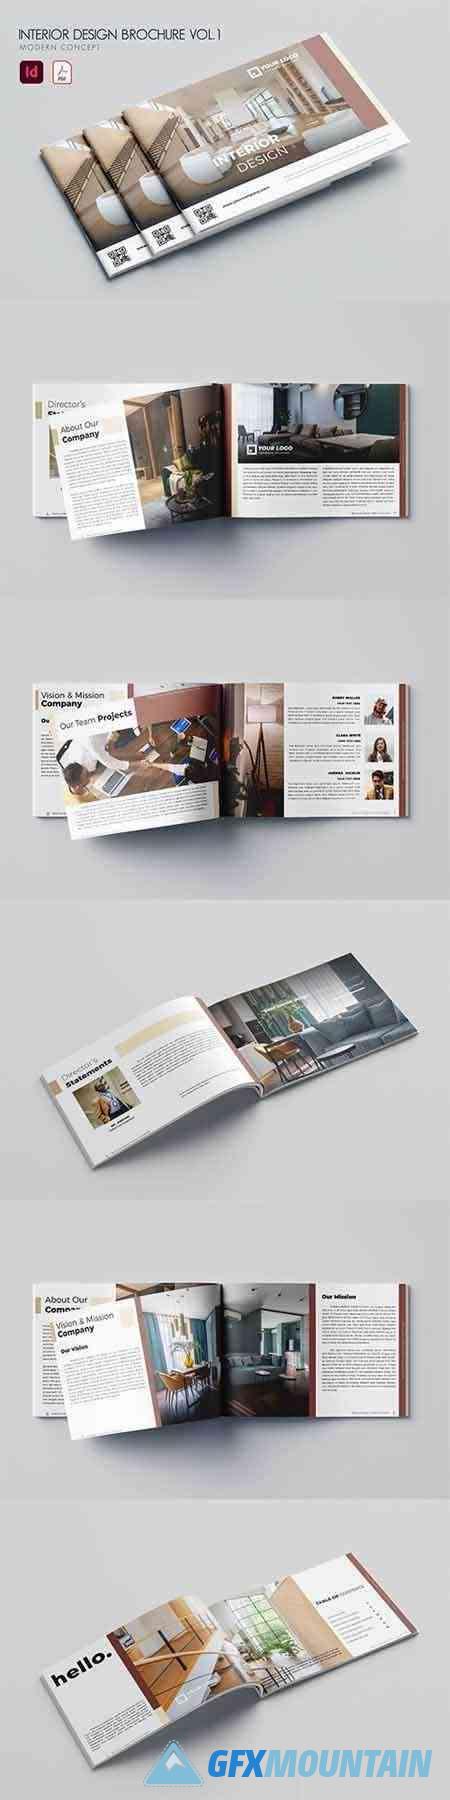 Interior Design Brochure Vol.1